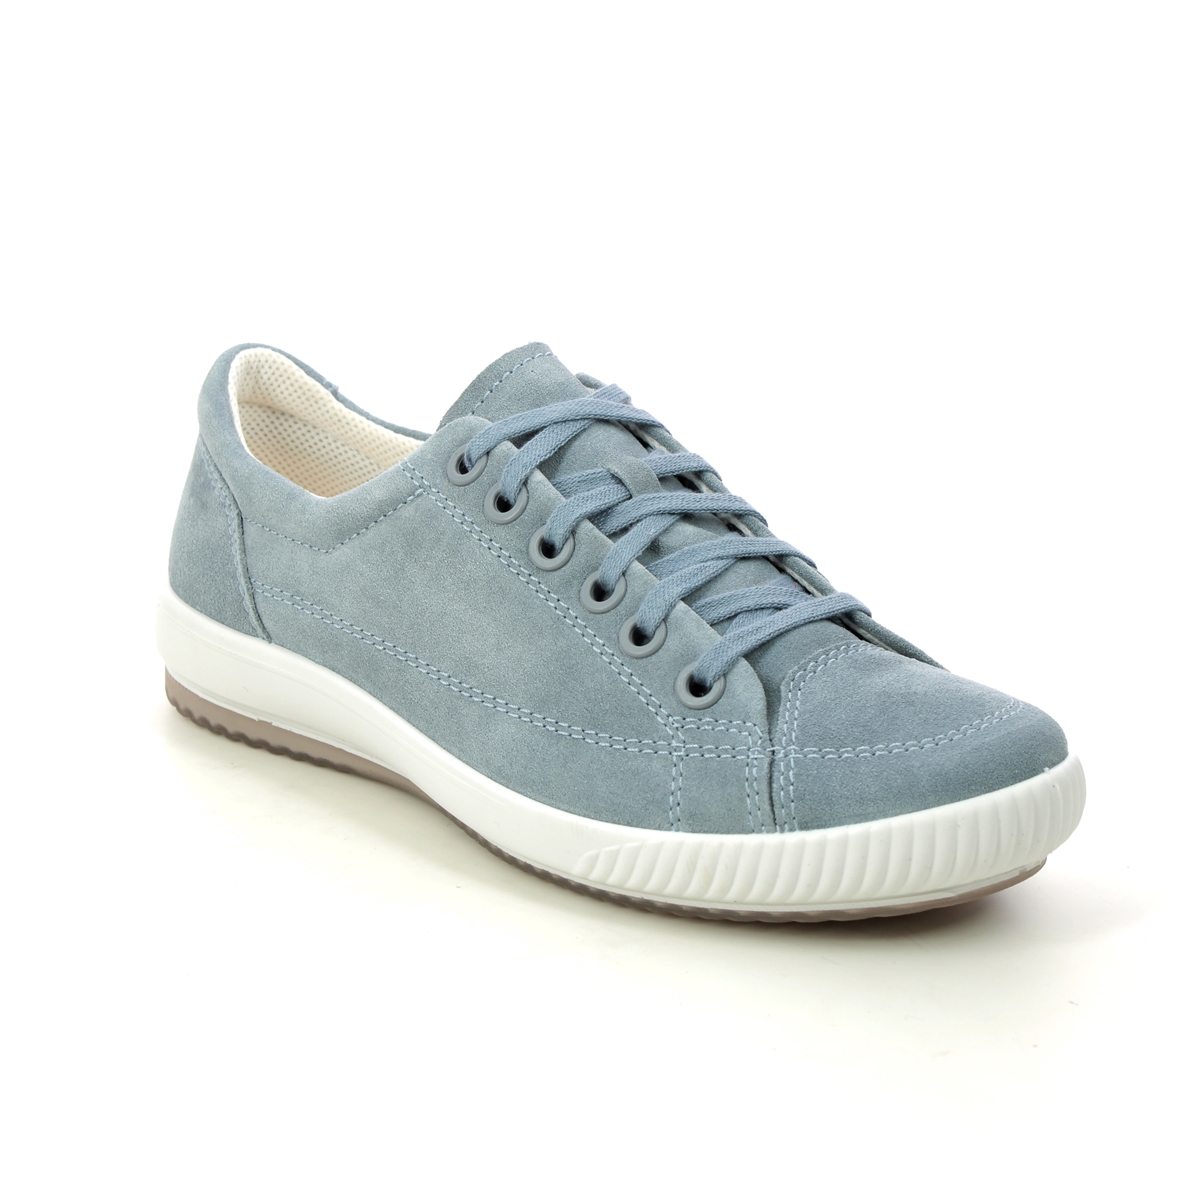 Legero Tanaro 5 Stitch Blue Grey Womens Lacing Shoes 2000161-8500 In Size 6.5 In Plain Blue Grey